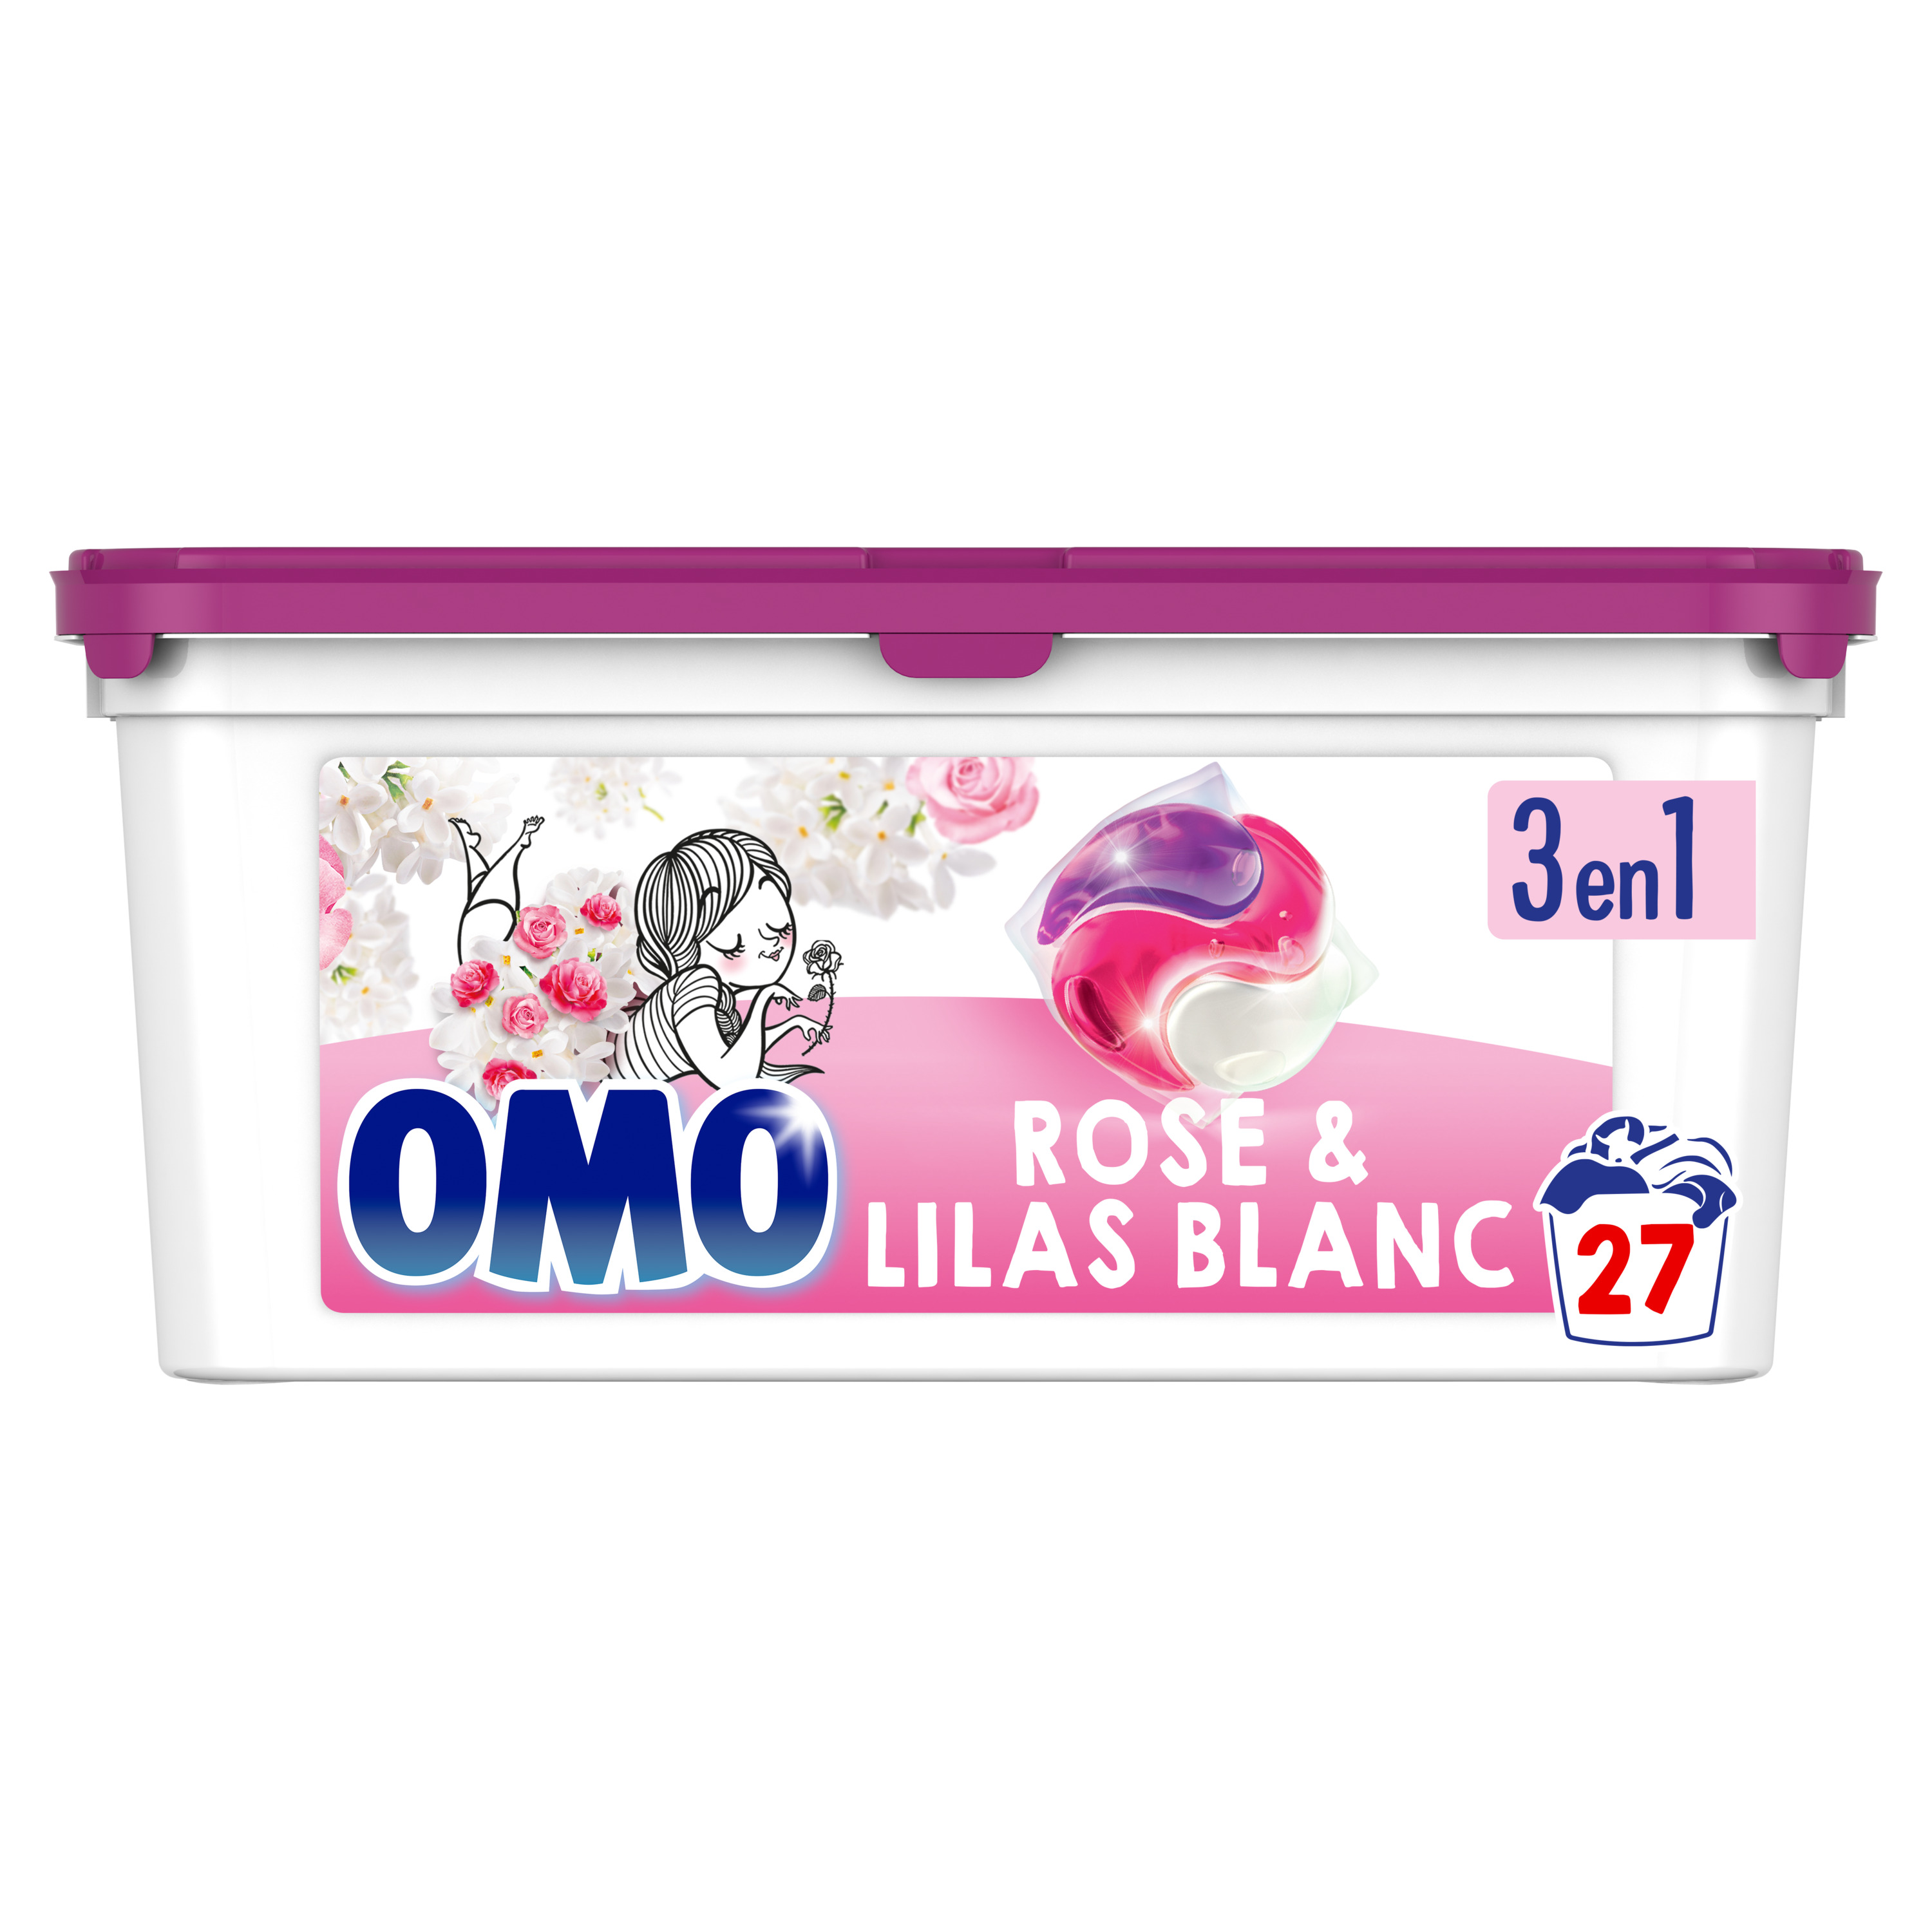 OMO Collection parfum Cajoline Capsule de lessive rose et lilas blanc 27  capsules pas cher 